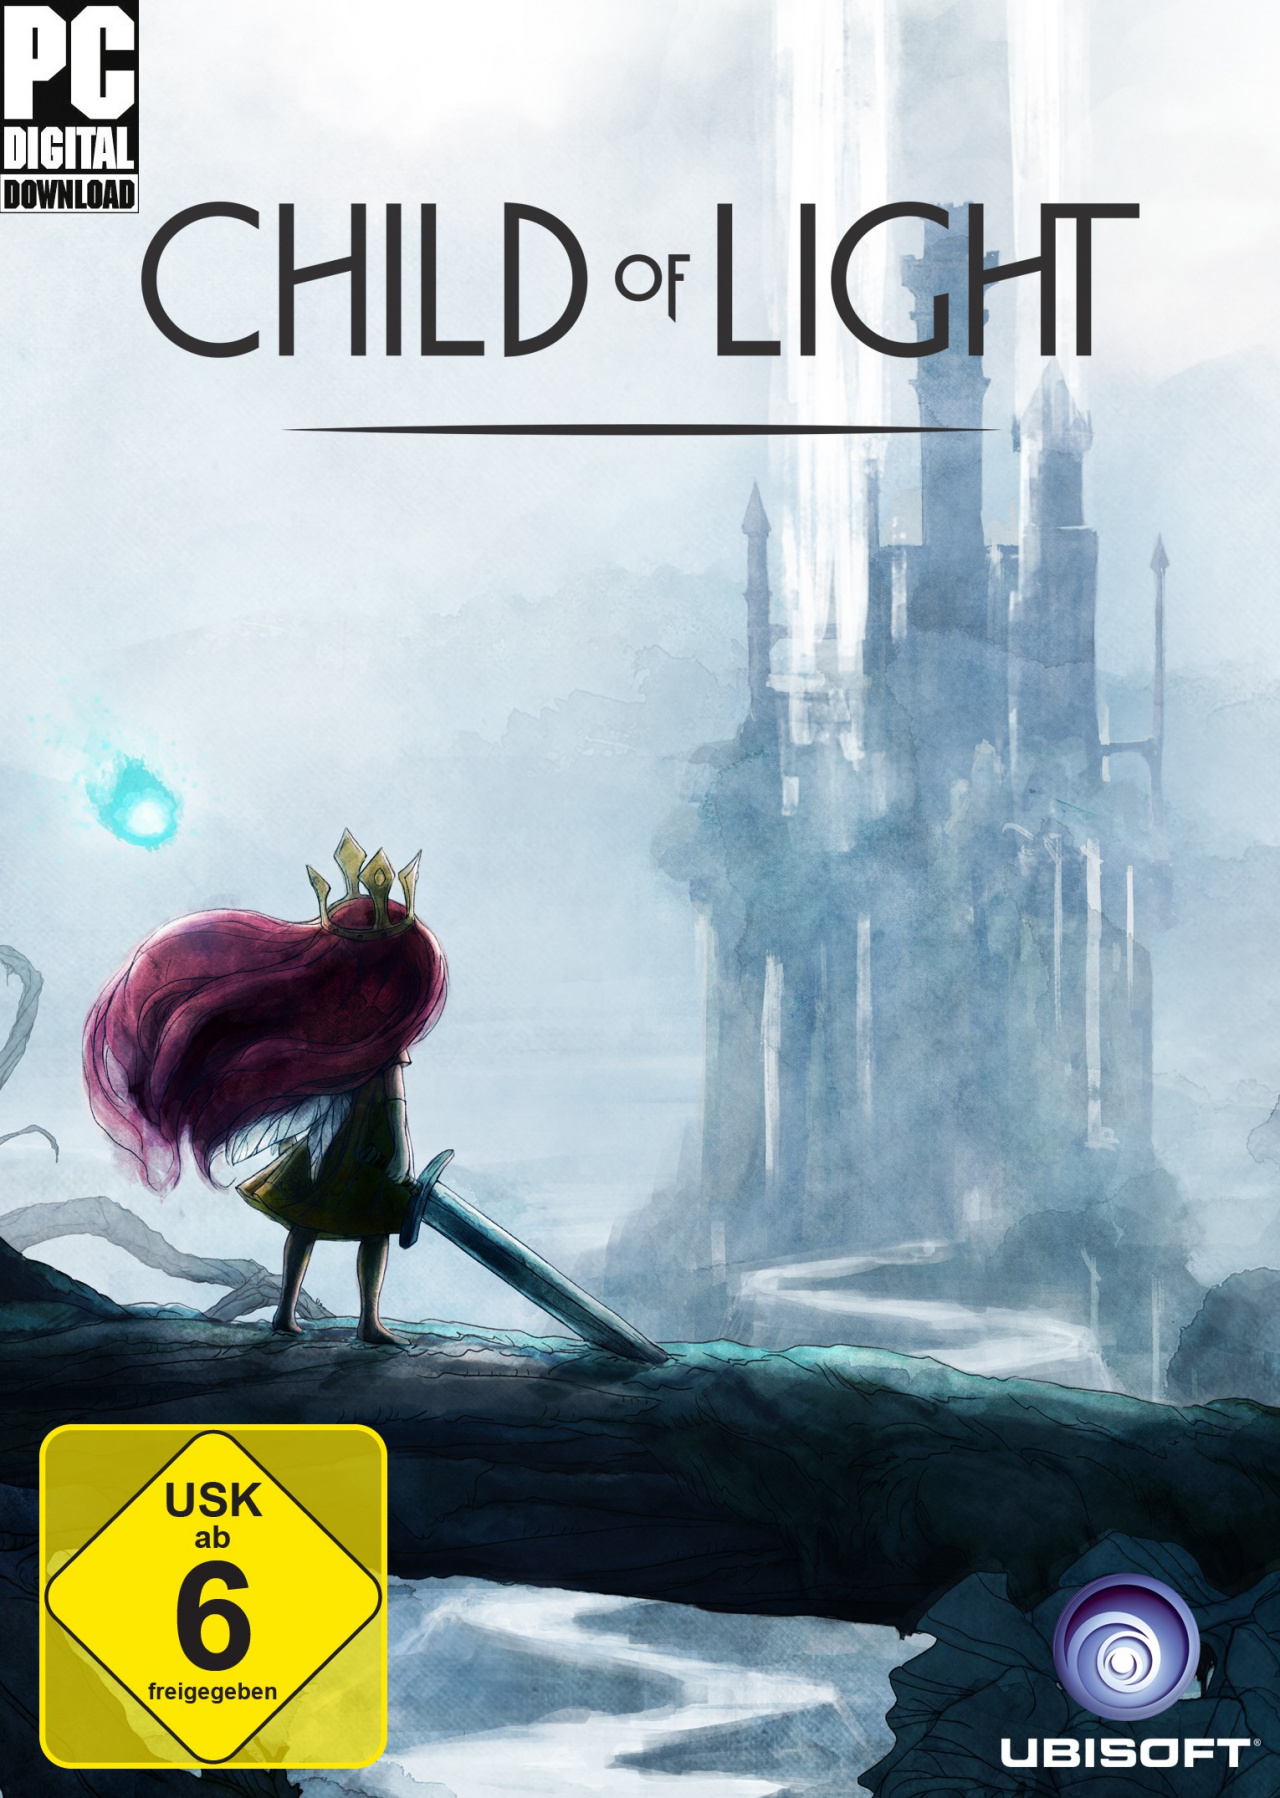 Child of light отзывы. Child of Light игра. Child of Light Джен. Child of Light Xbox 360 обложка. Child of Light голем.